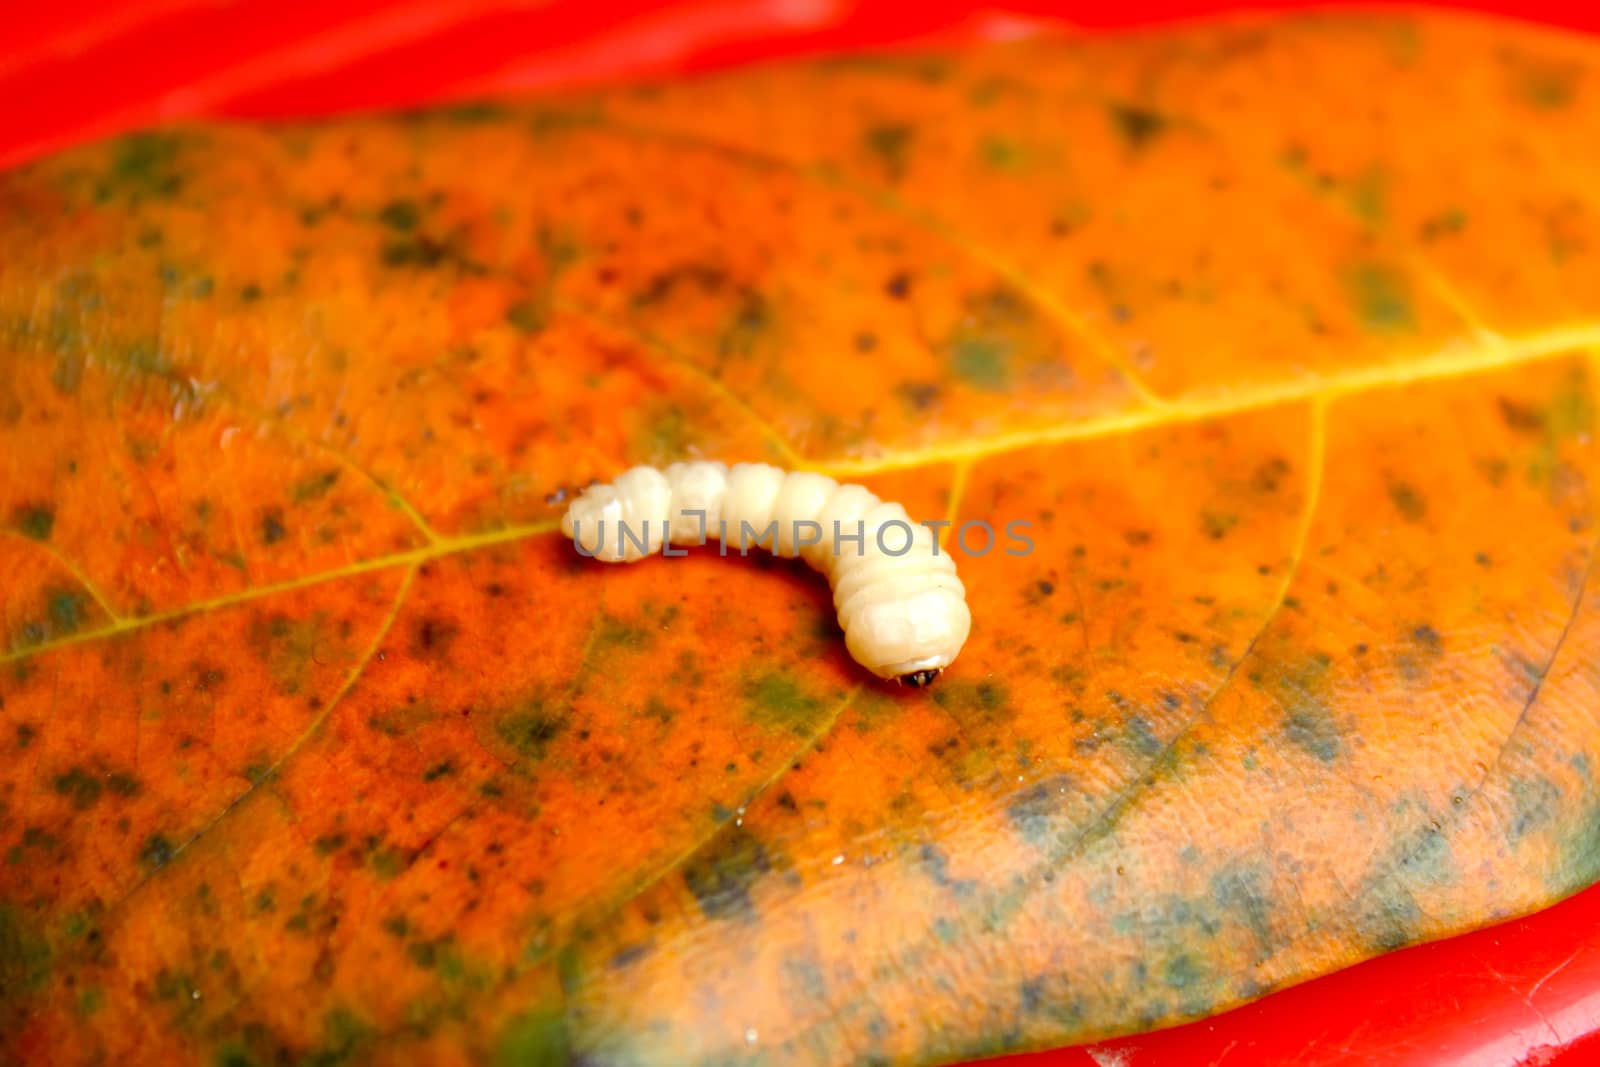 Sawfly larvae by dinhngochung